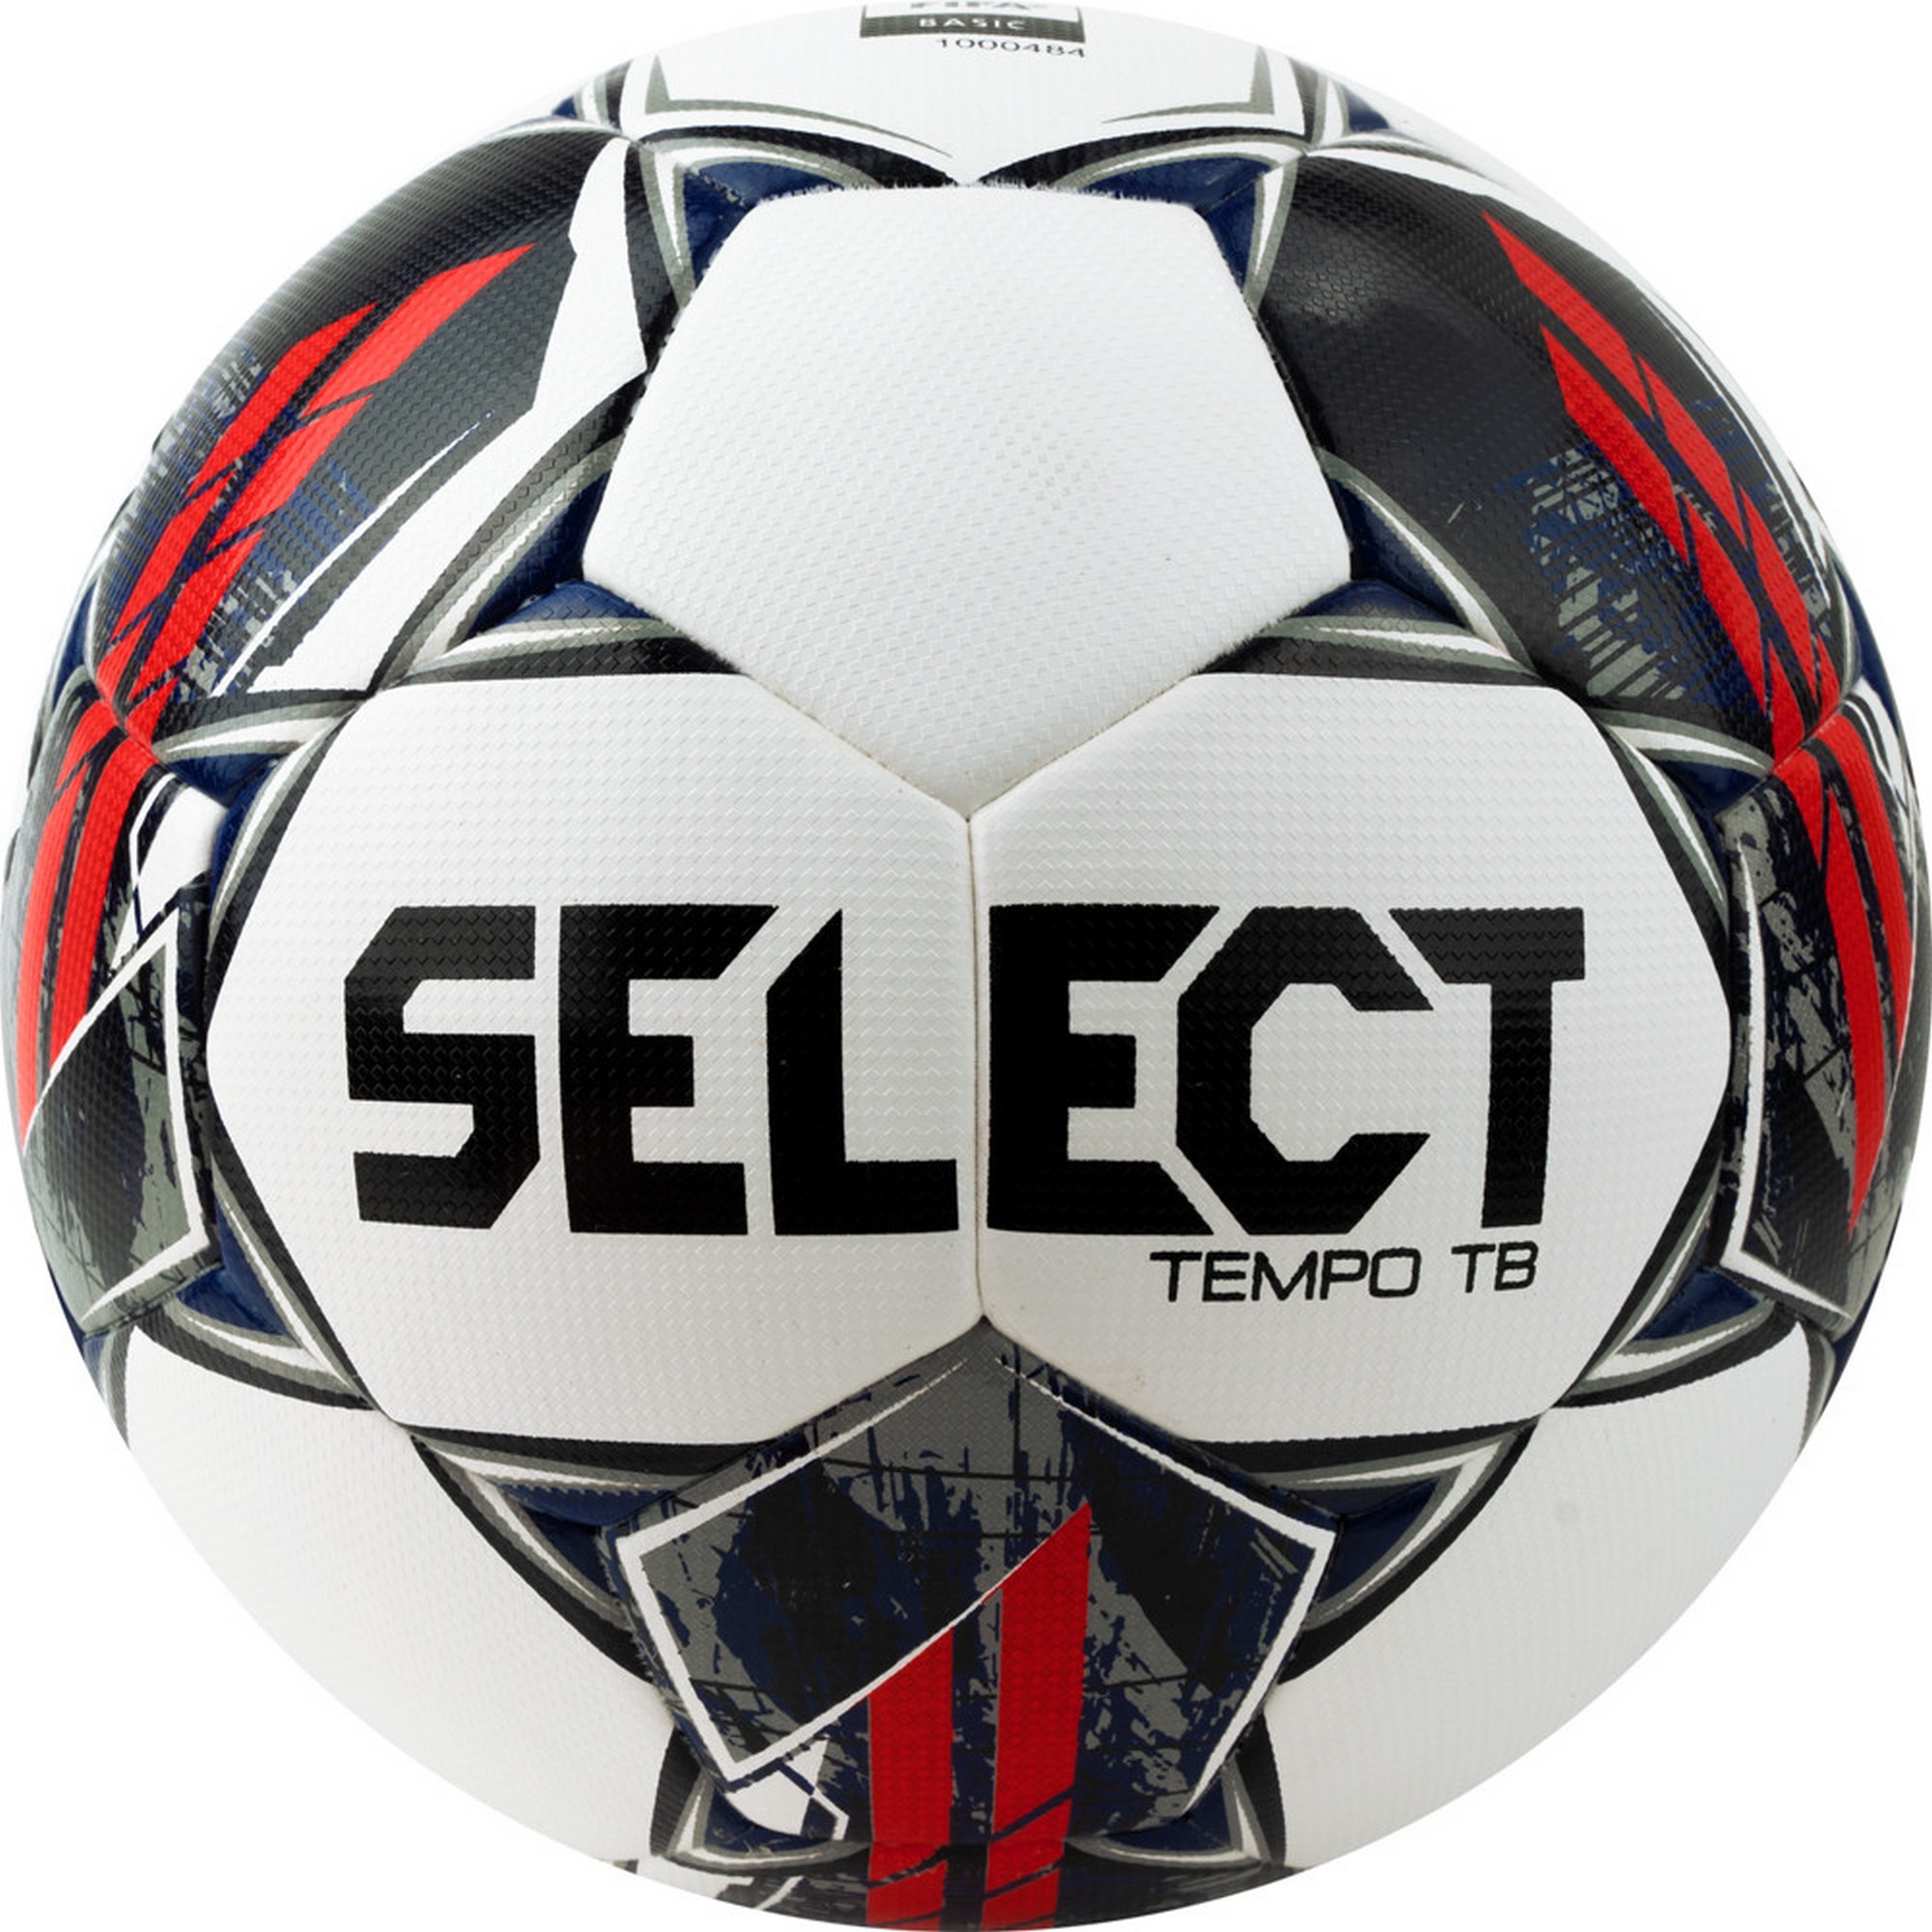   Select Tempo TB V23 0575060001 .5, FIFA Basic